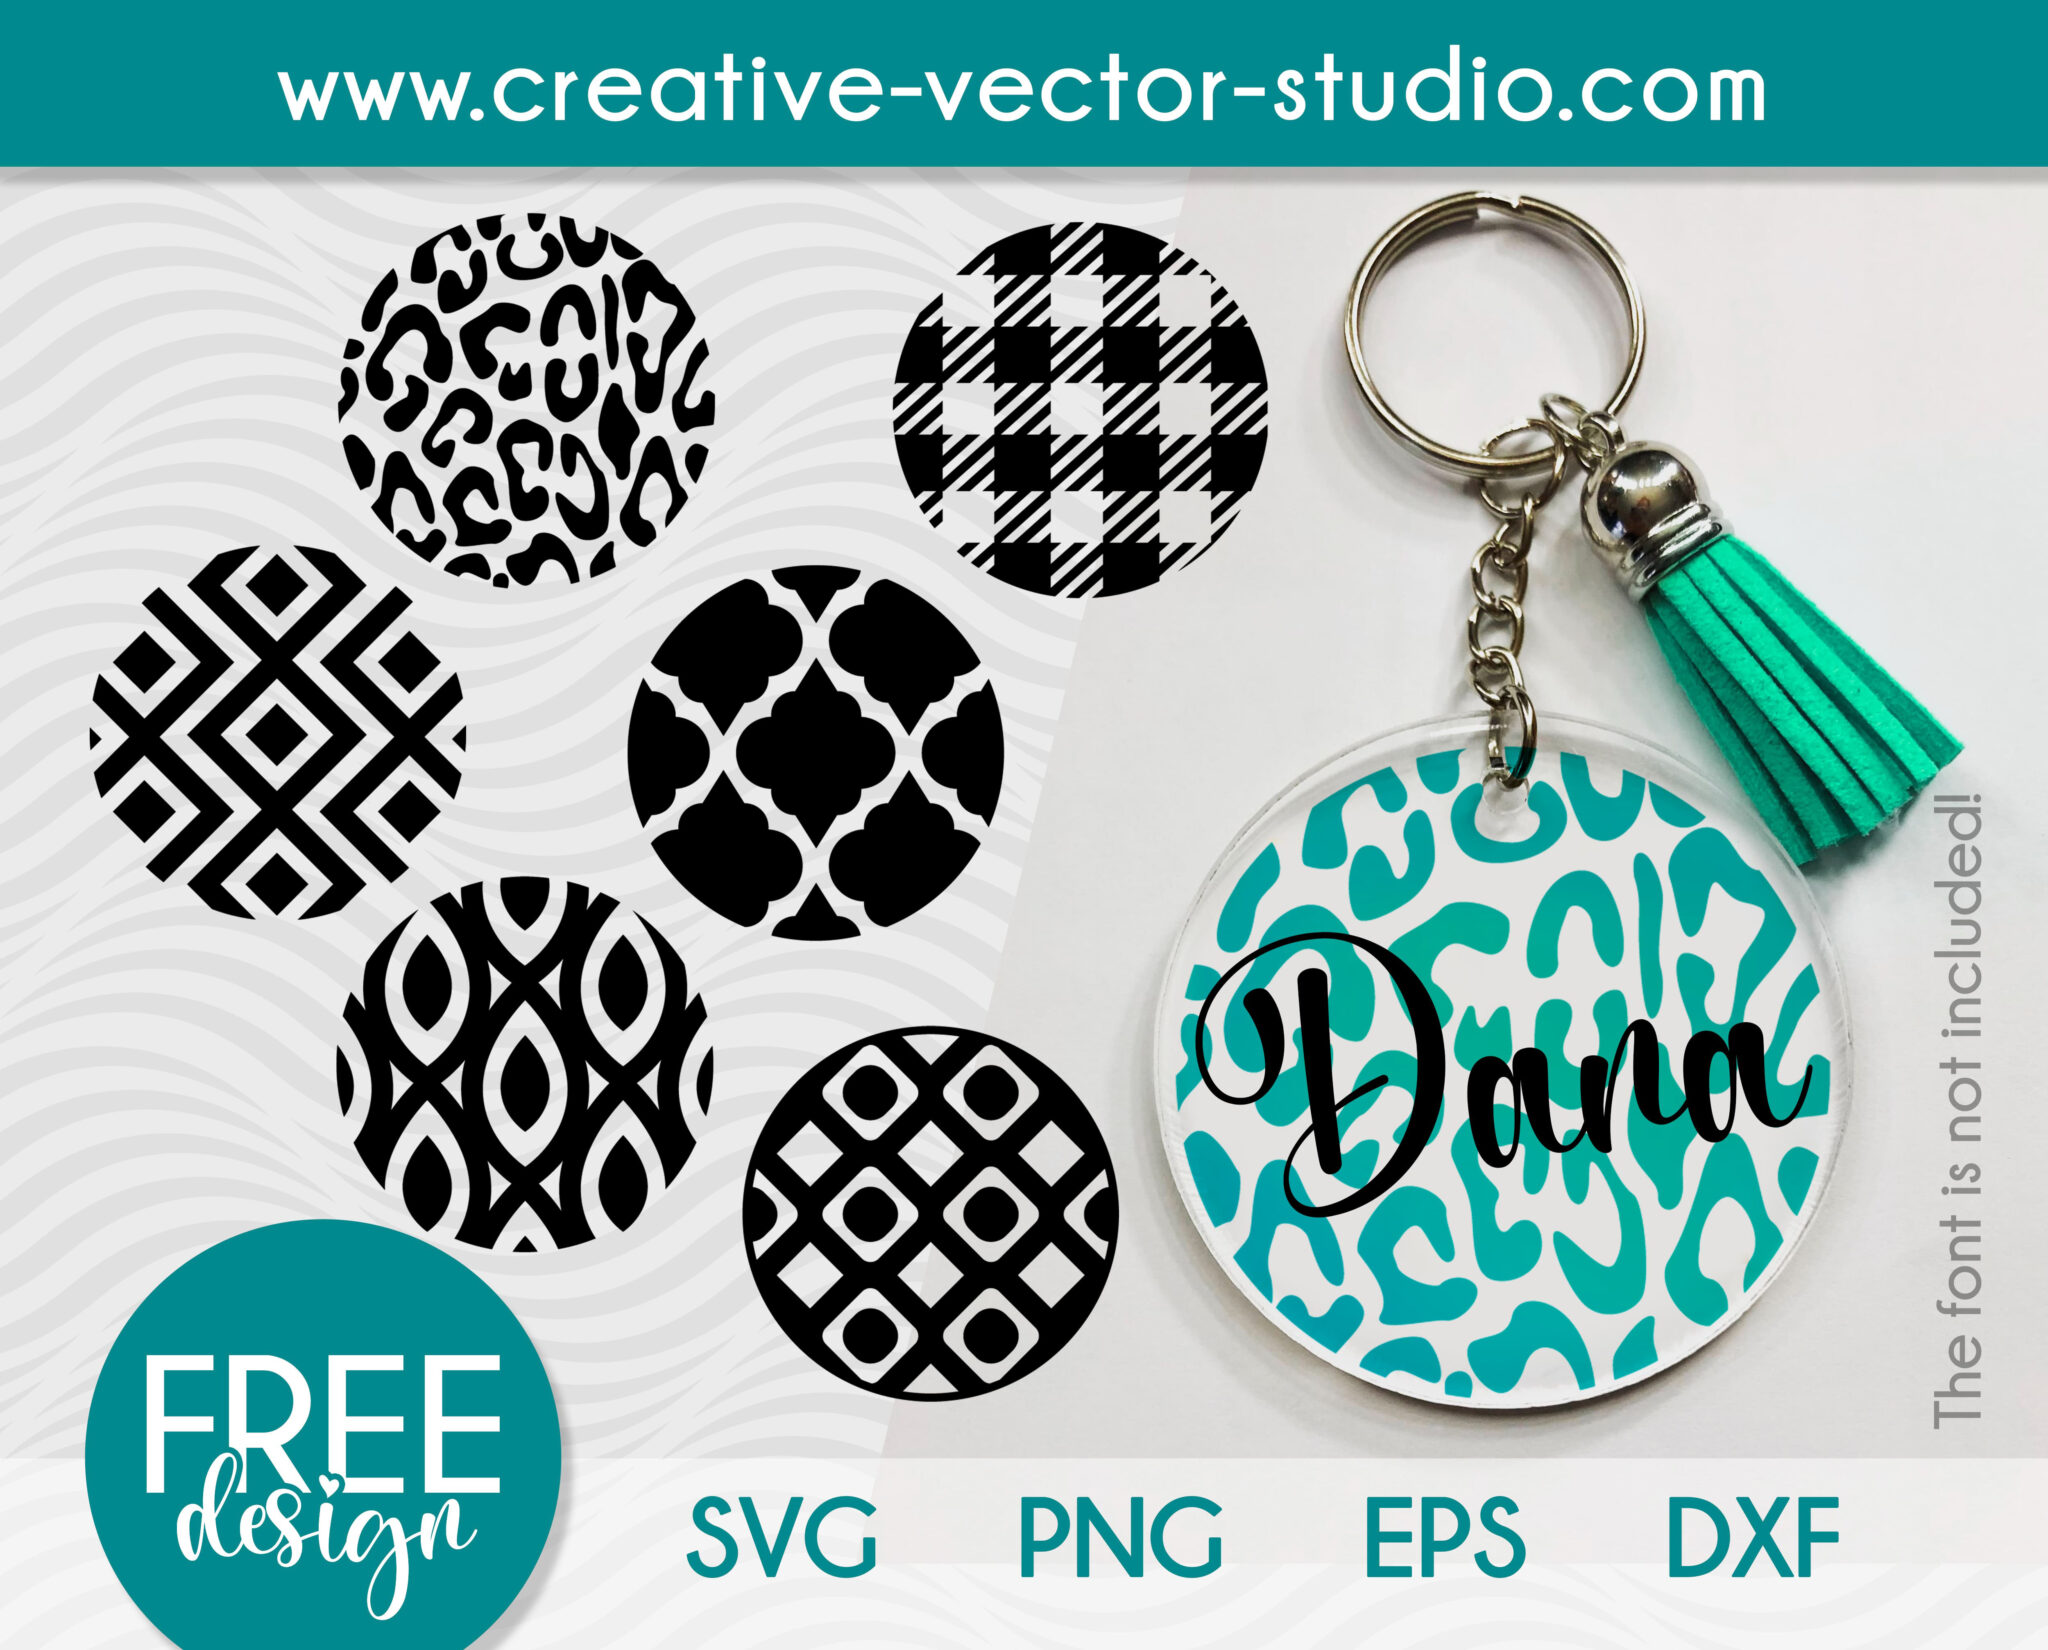 Free Keyring SVG Pattern - Creative Vector Studio